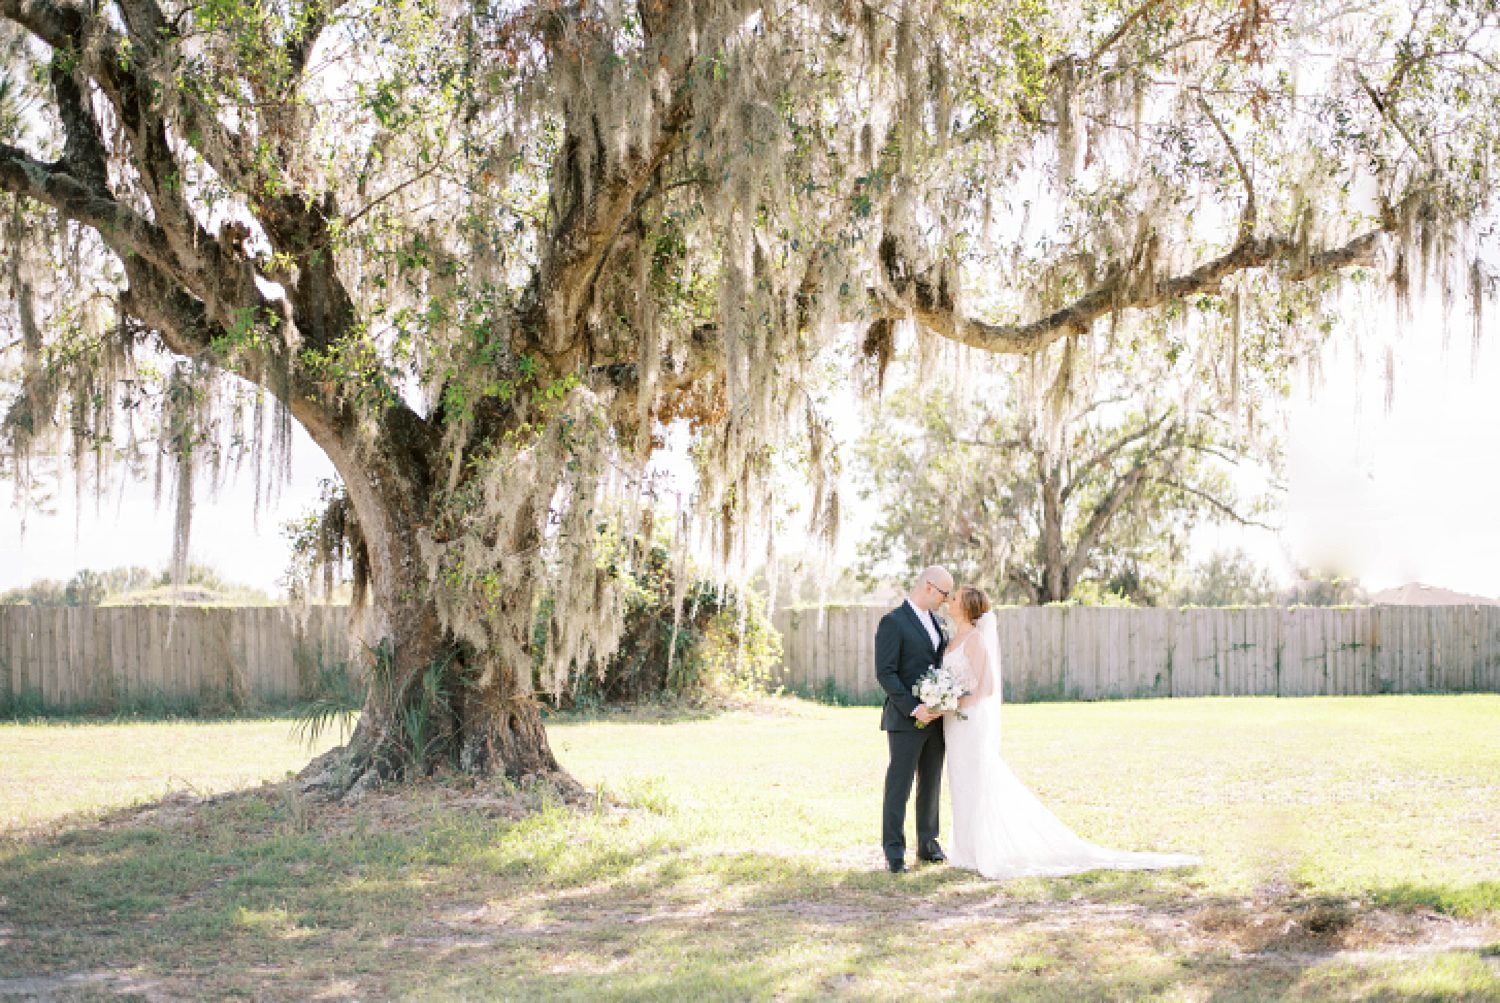 newlyweds hug under oak tree during portraits in Tampa FL